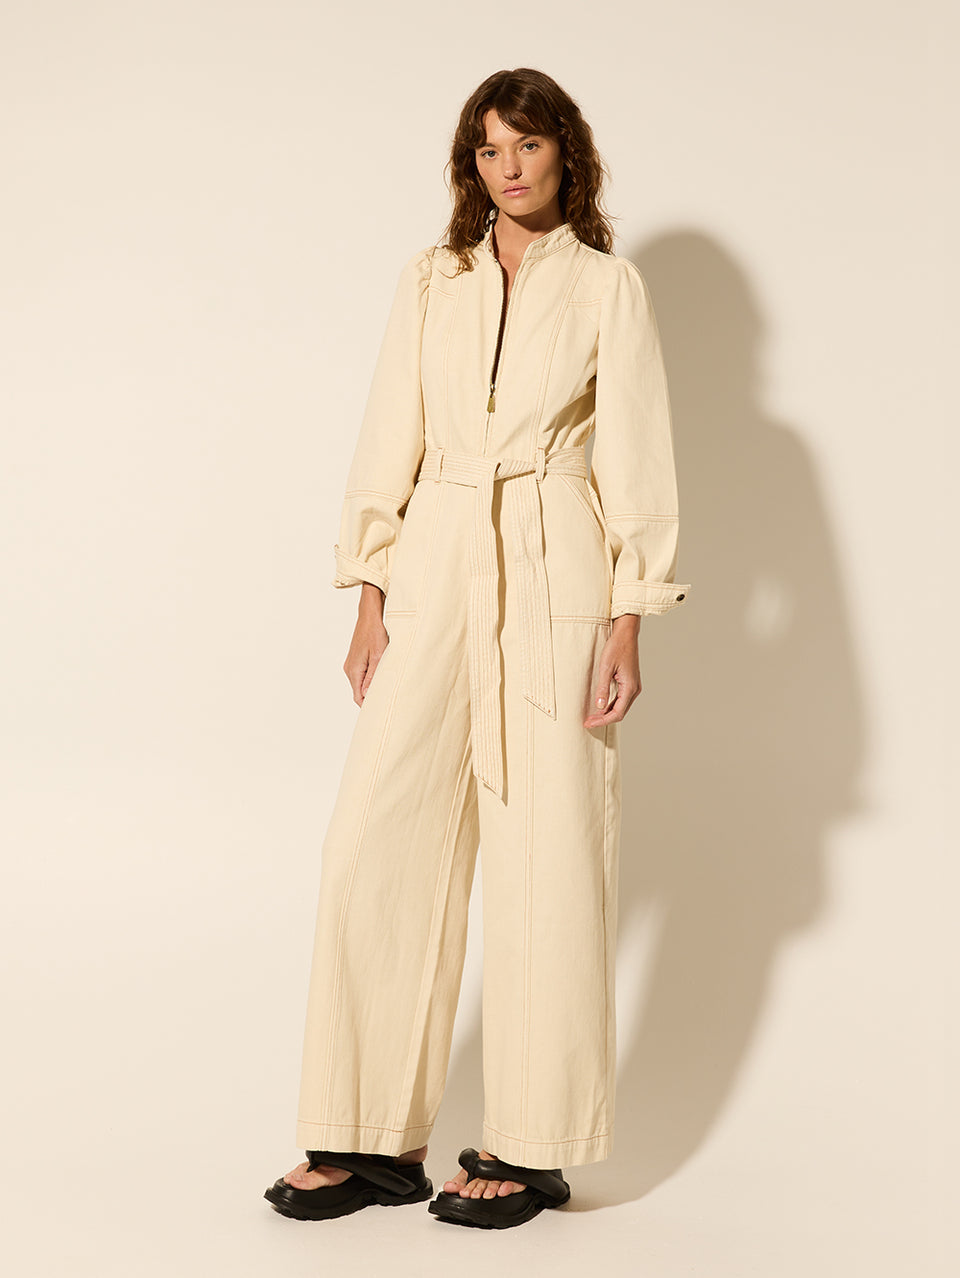 Lourdes Boilersuit Cream | Model wears cream boilersuit side view